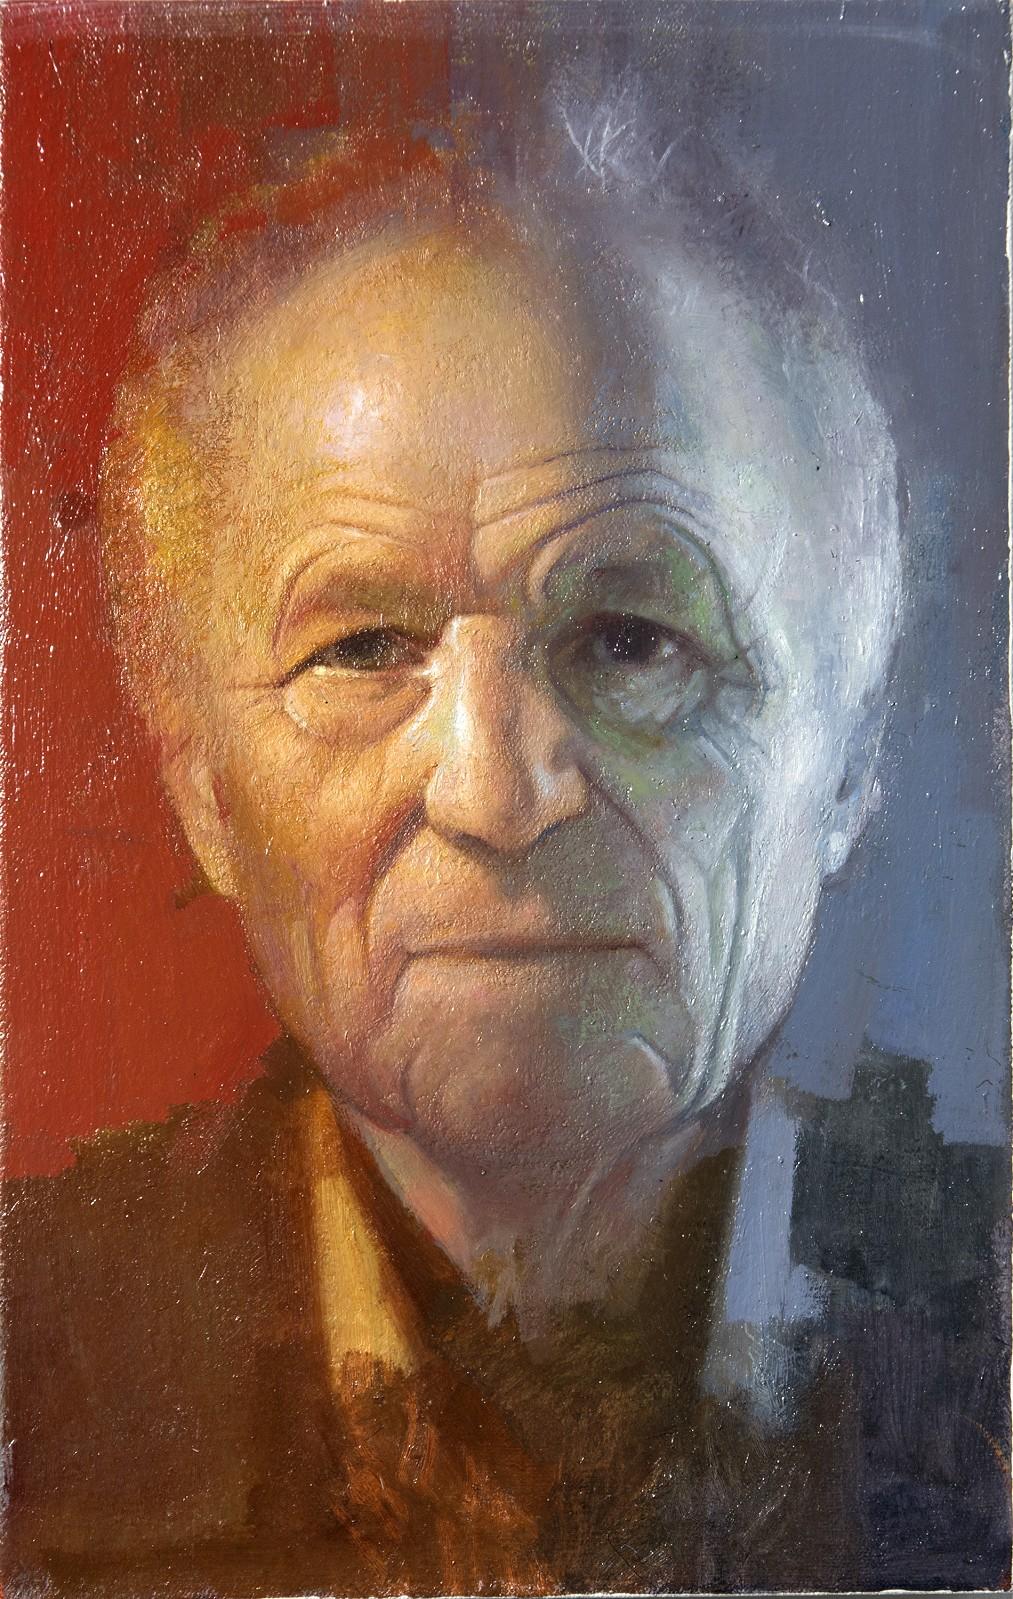 Daniel Hughes Figurative Painting - Antonio Lopez Garcia - red, blue, male, figurative, portrait, oil on canvas